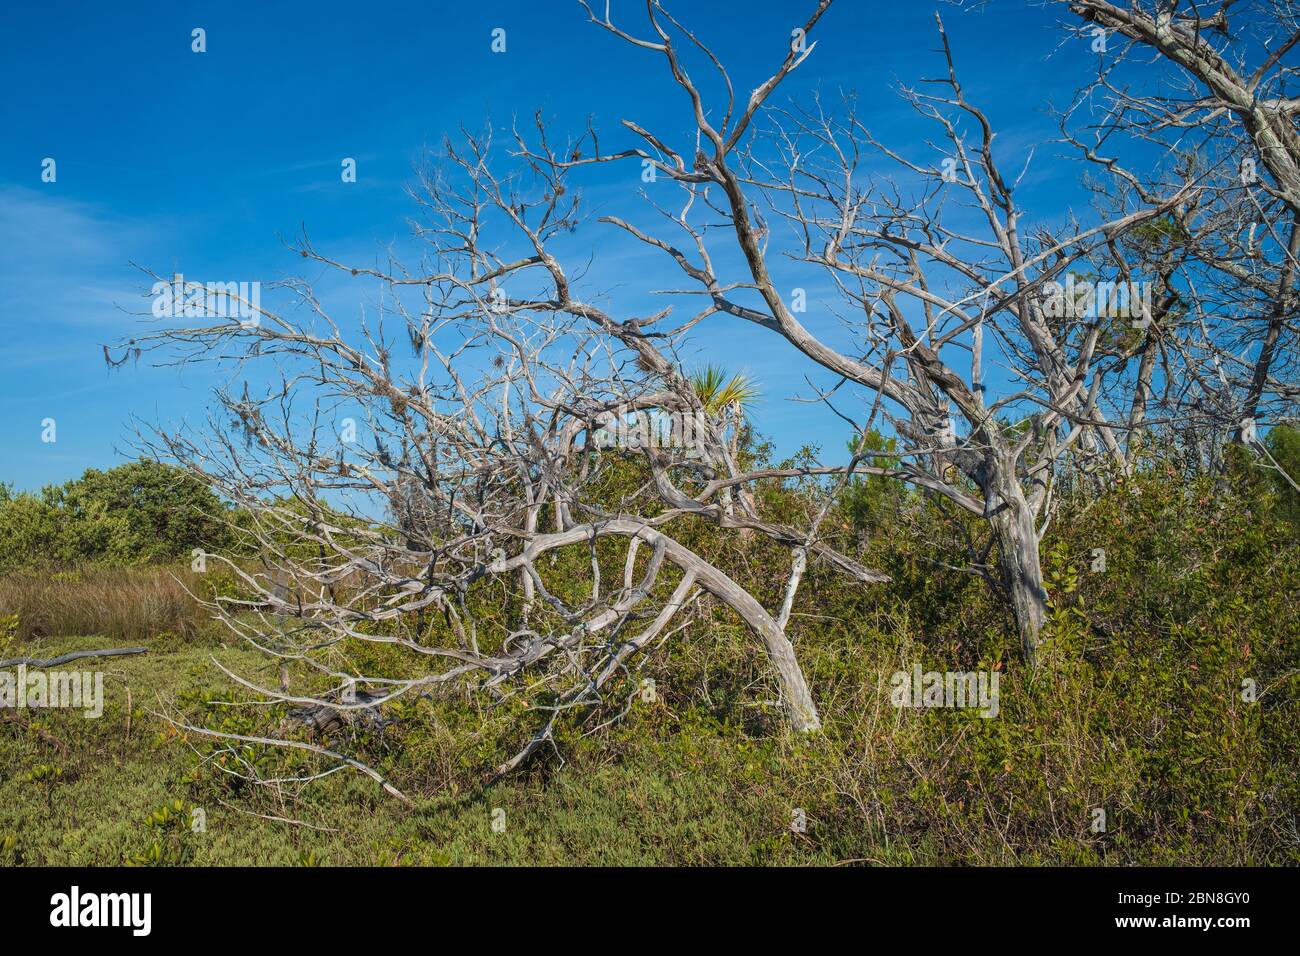 Salt marsh tree scenic landscape. Dry trees in Florida Salt marsh habitat. Citrus County. North central Florida. Stock Photo